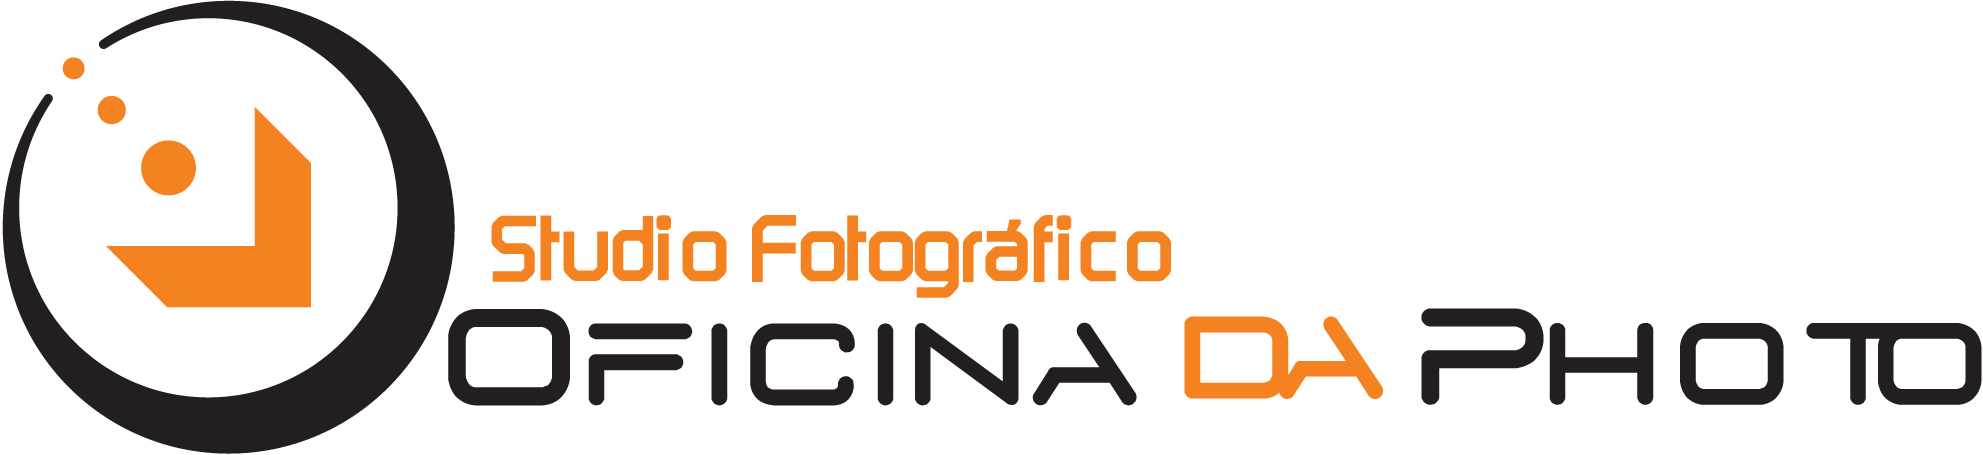 OFICINA DA PHOTO logo